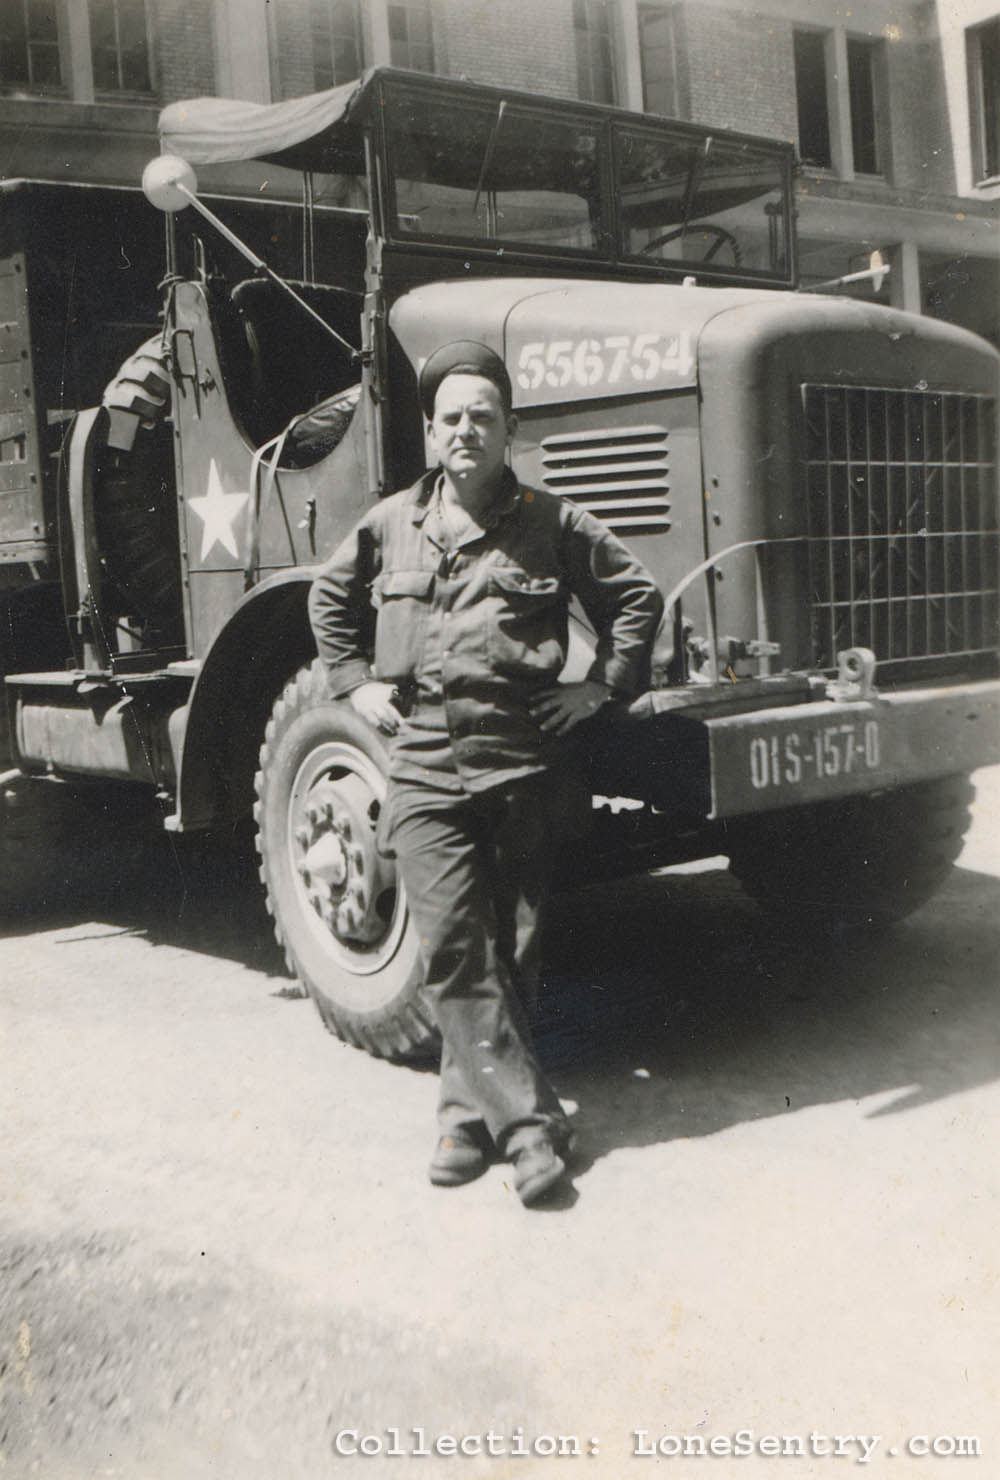 Truck: OIS 157th Ordnance Battalion Photo Set, Oise Intermediate Section, WWII